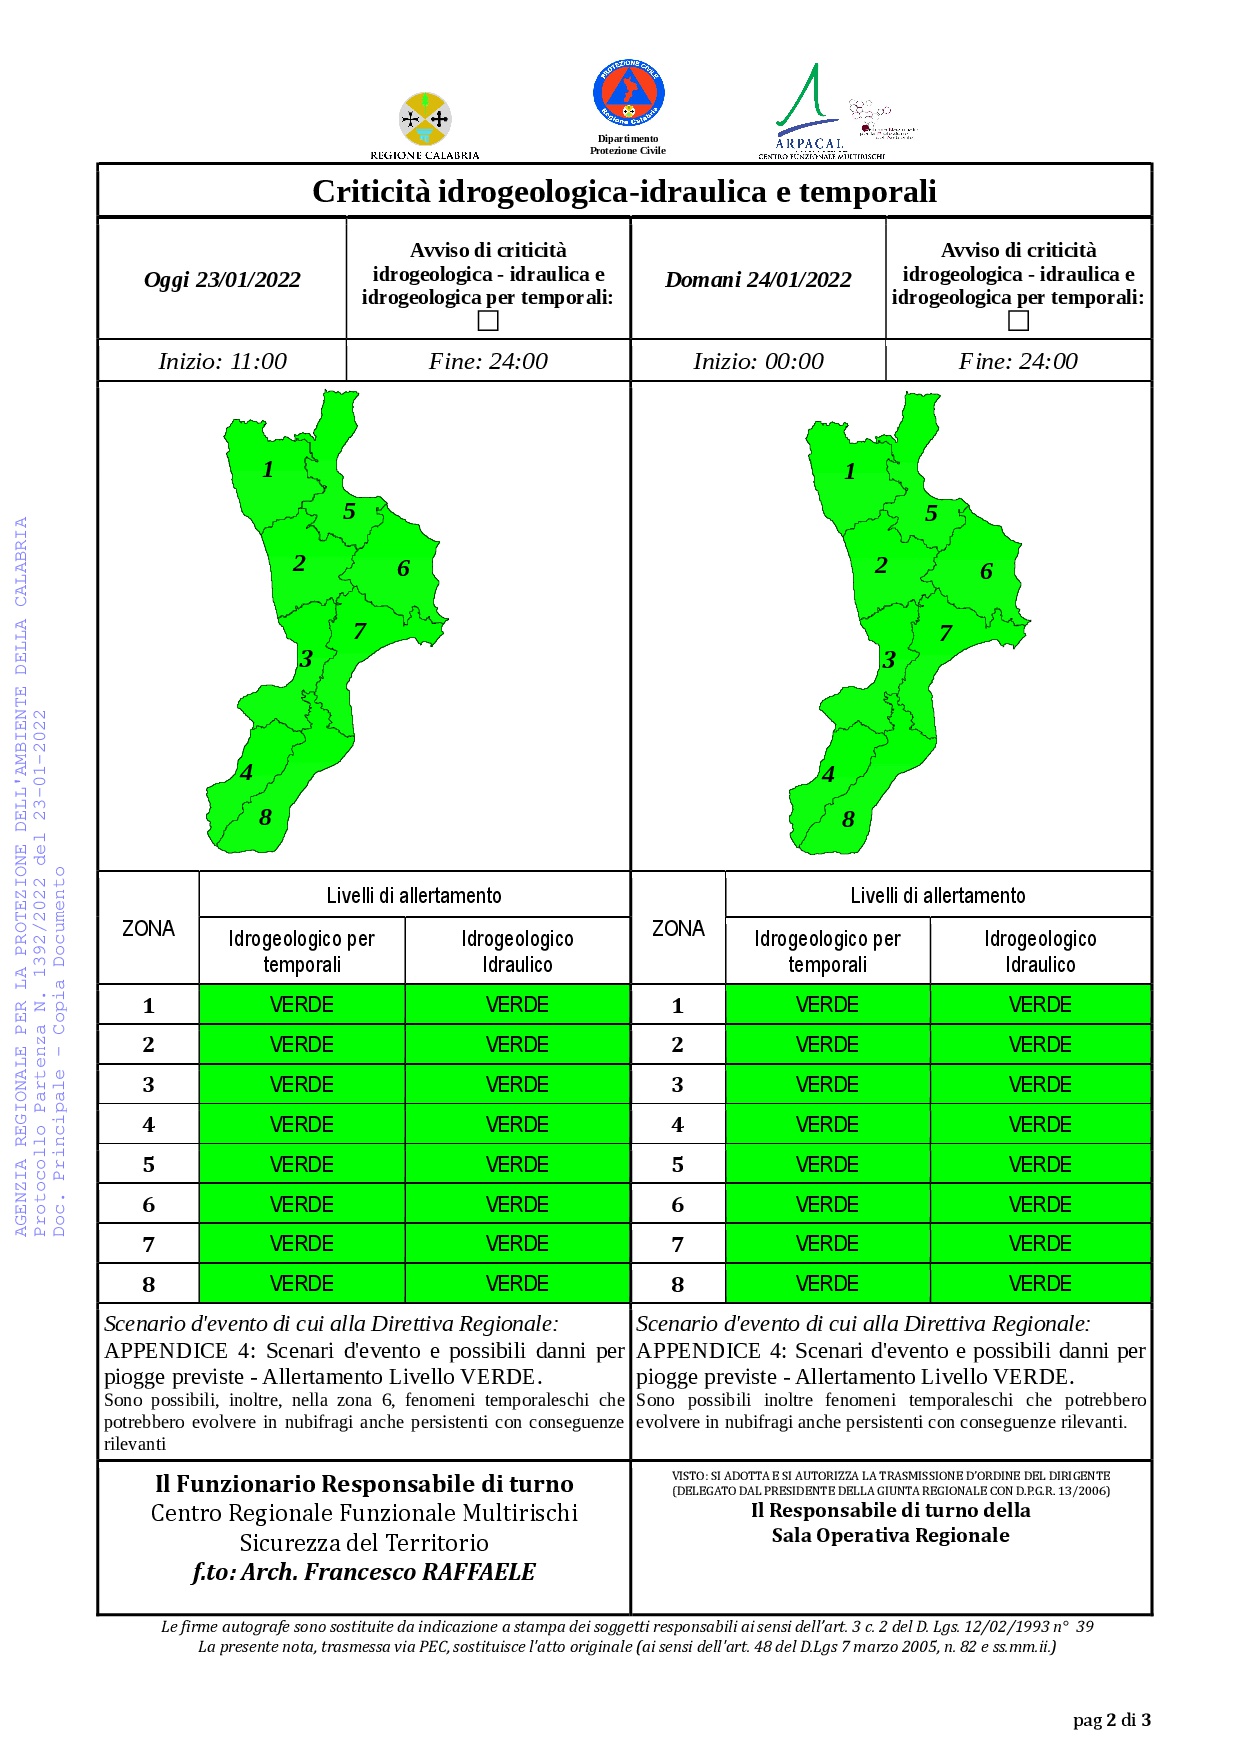 Criticità idrogeologica-idraulica e temporali in Calabria 23-01-2022